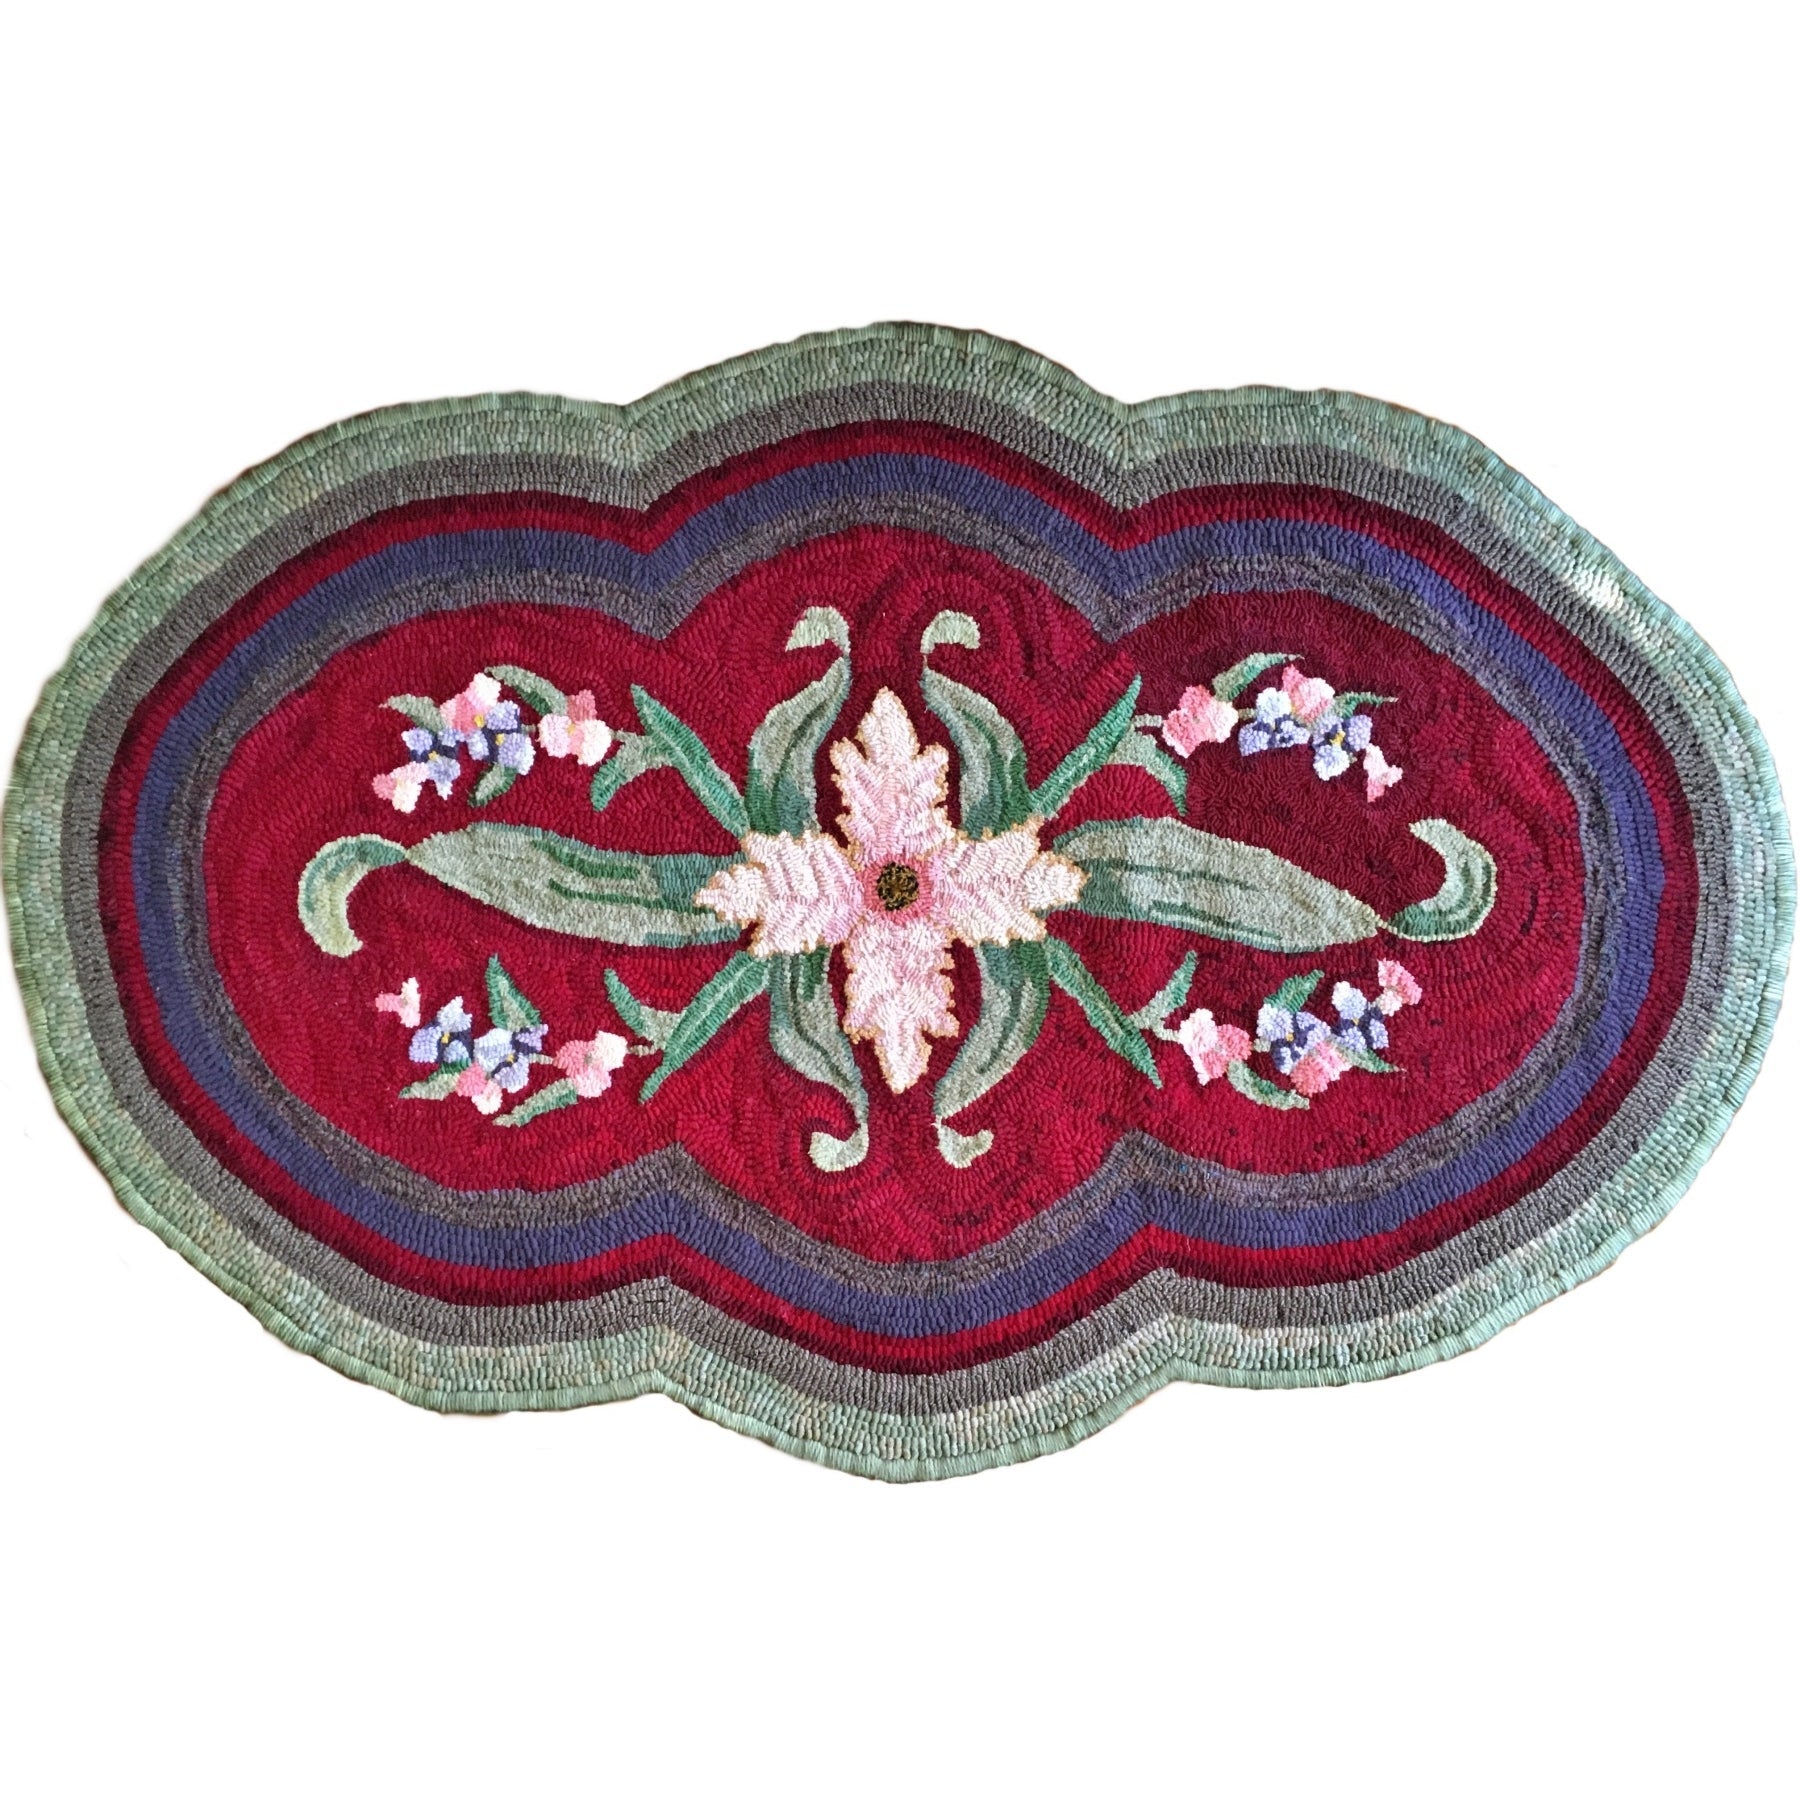 Peg, rug hooked by Karen Tromza